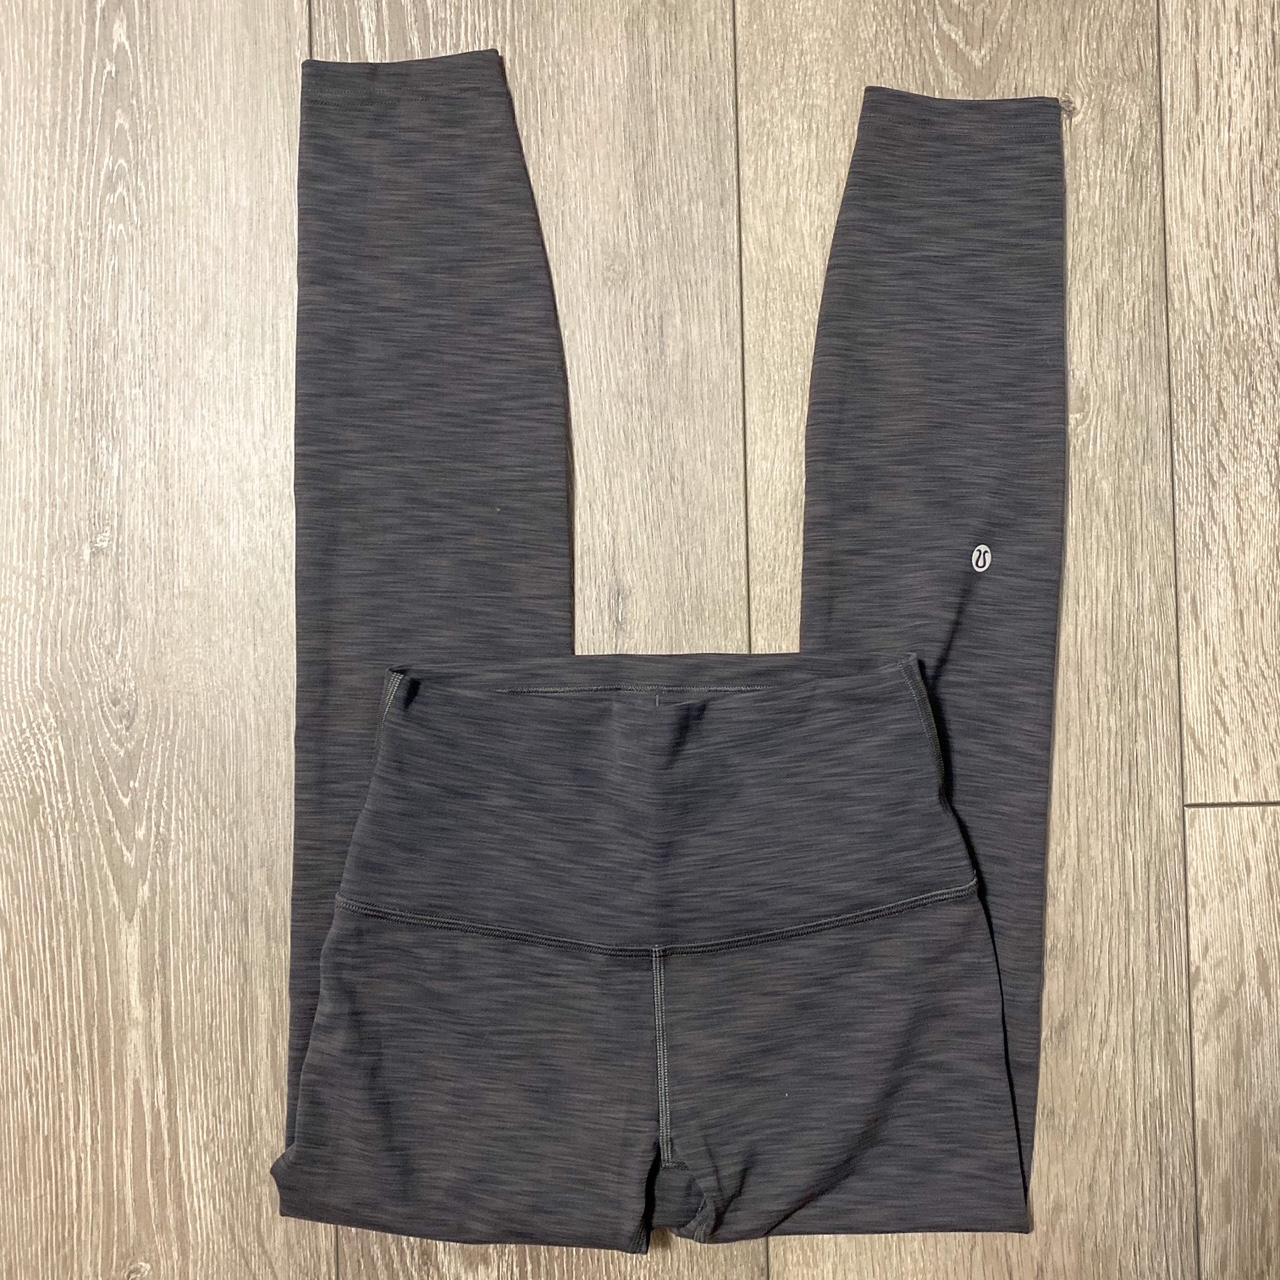 heathered black / heathered grey align leggings size - Depop